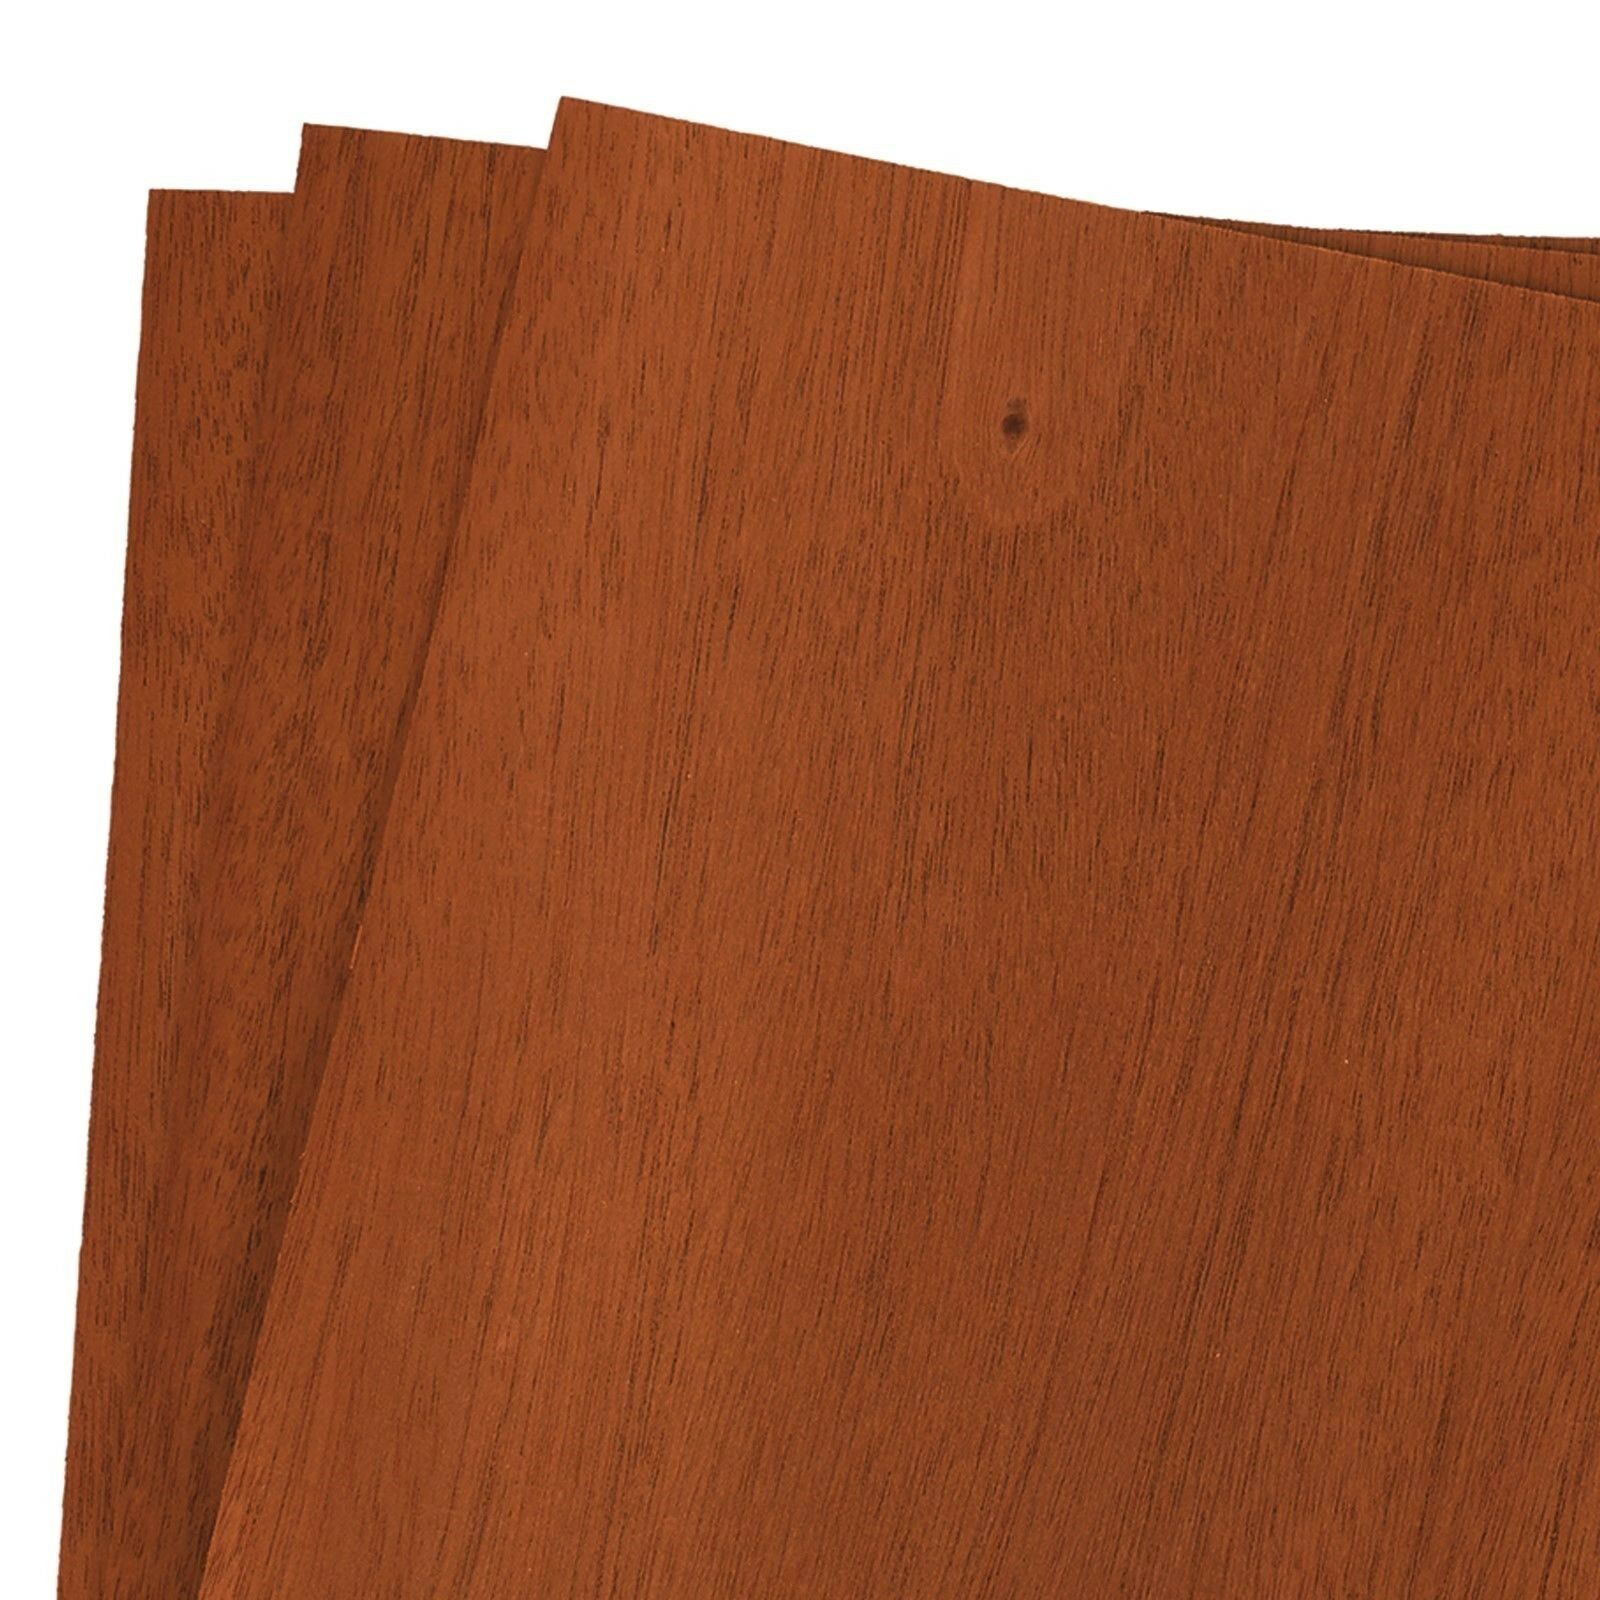 Mahogany Wood Veneer Raw/unbacked 12" X 12" (1' X 1') Pack Of 3 Sheets